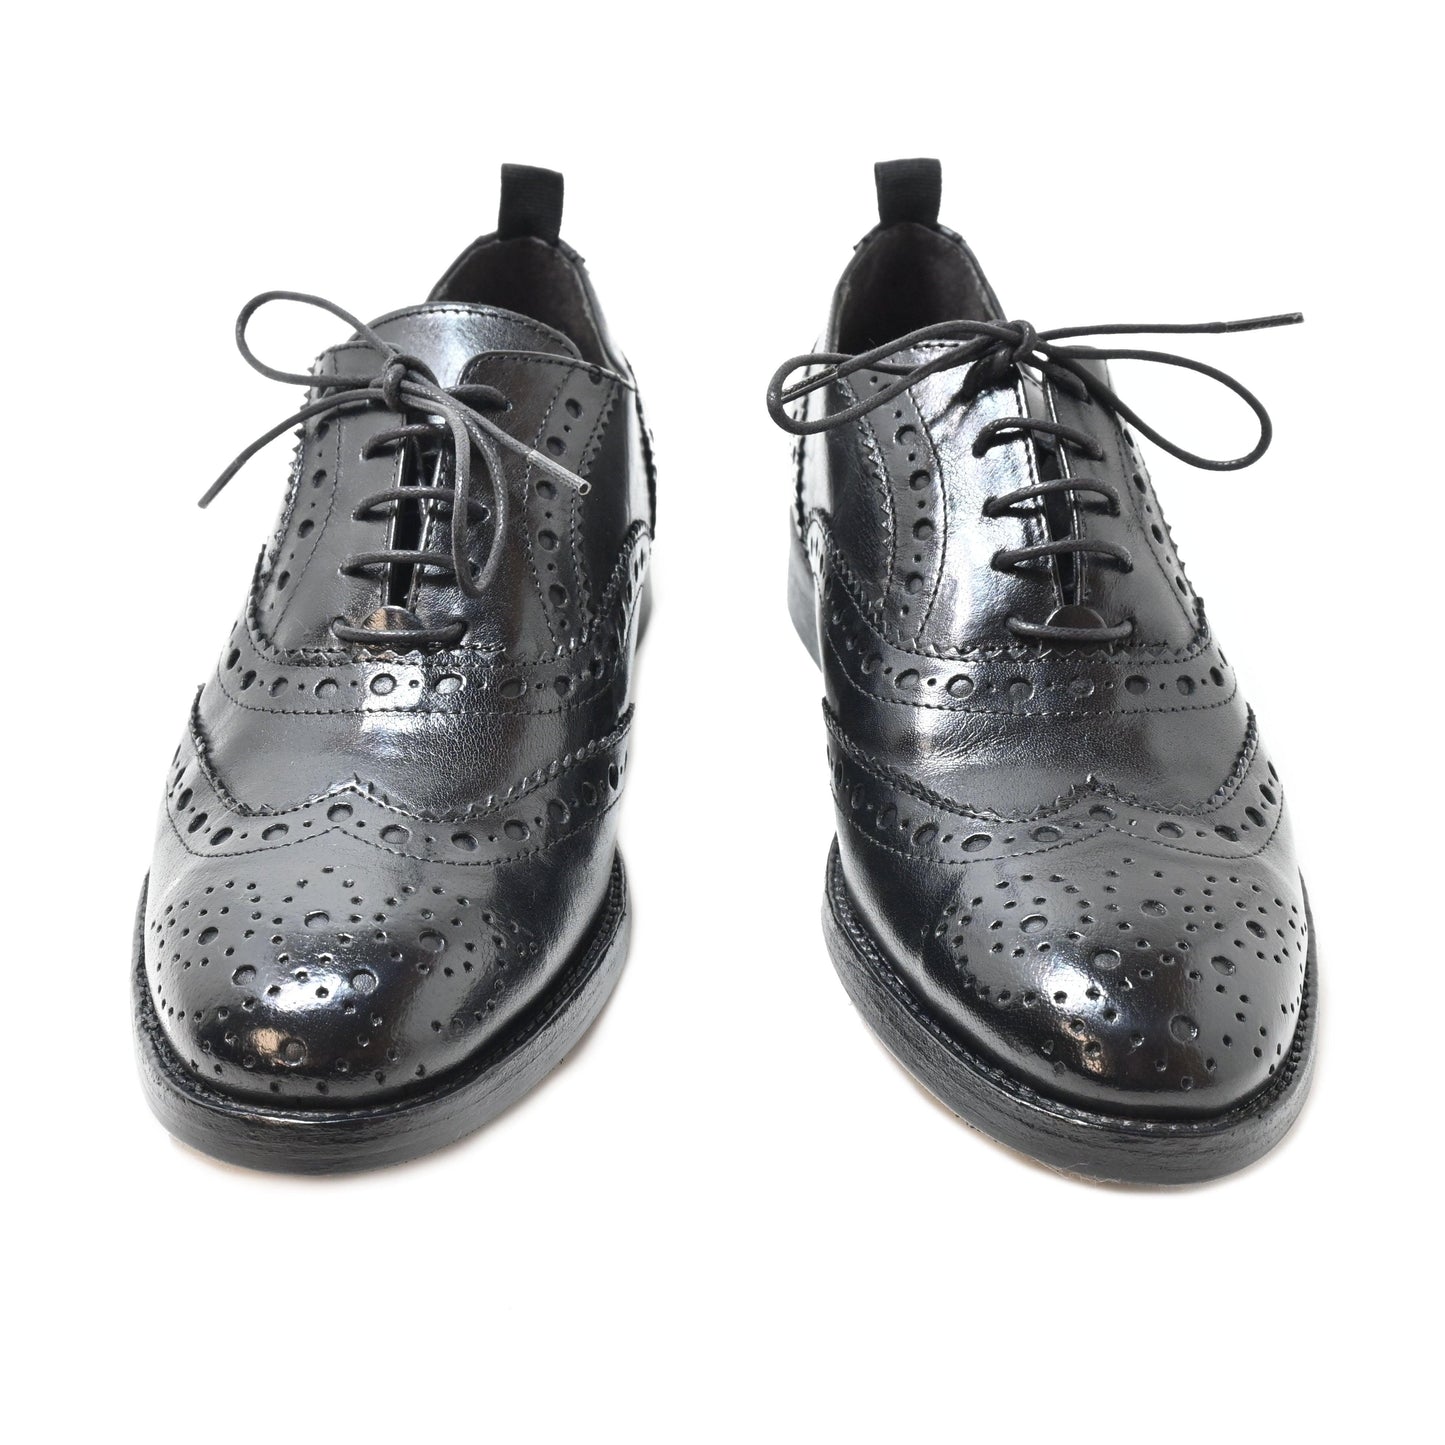 TYPE 04 - british shoes leather BLACK - History541